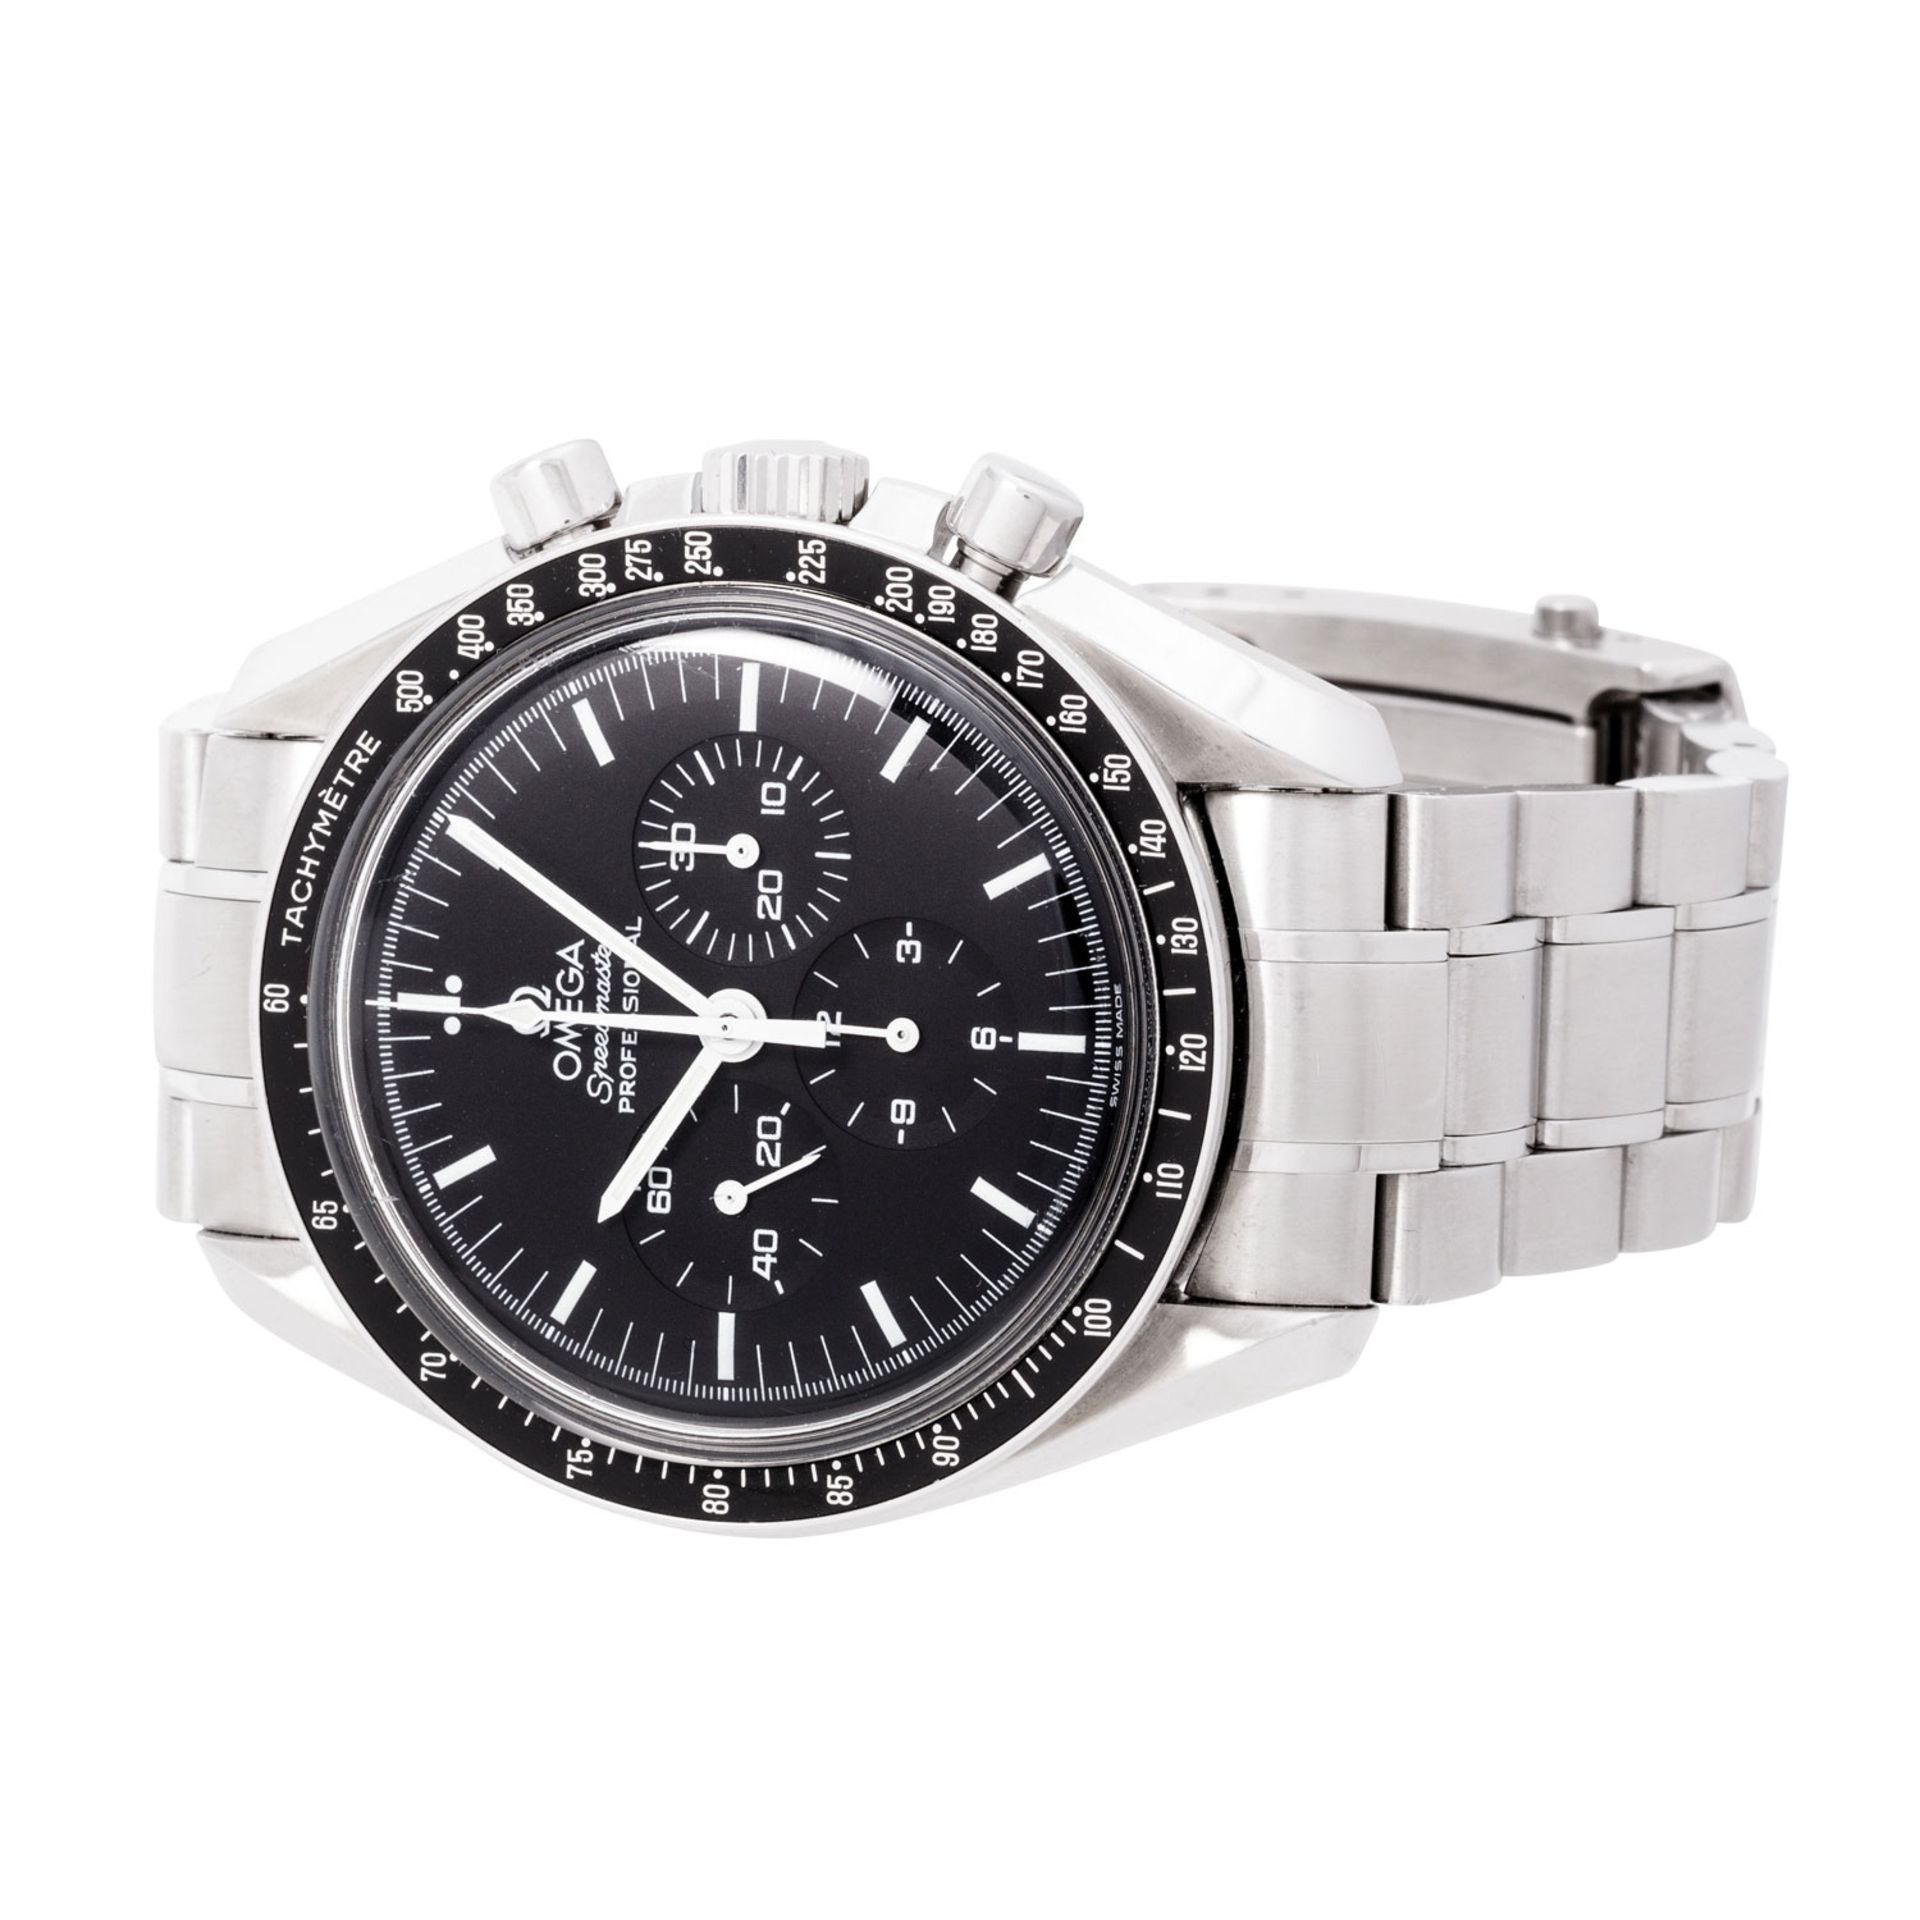 OMEGA Speedmaster Professional Moonwatch Ref. 345.0022 Herren Armbanduhr.  - Bild 6 aus 8